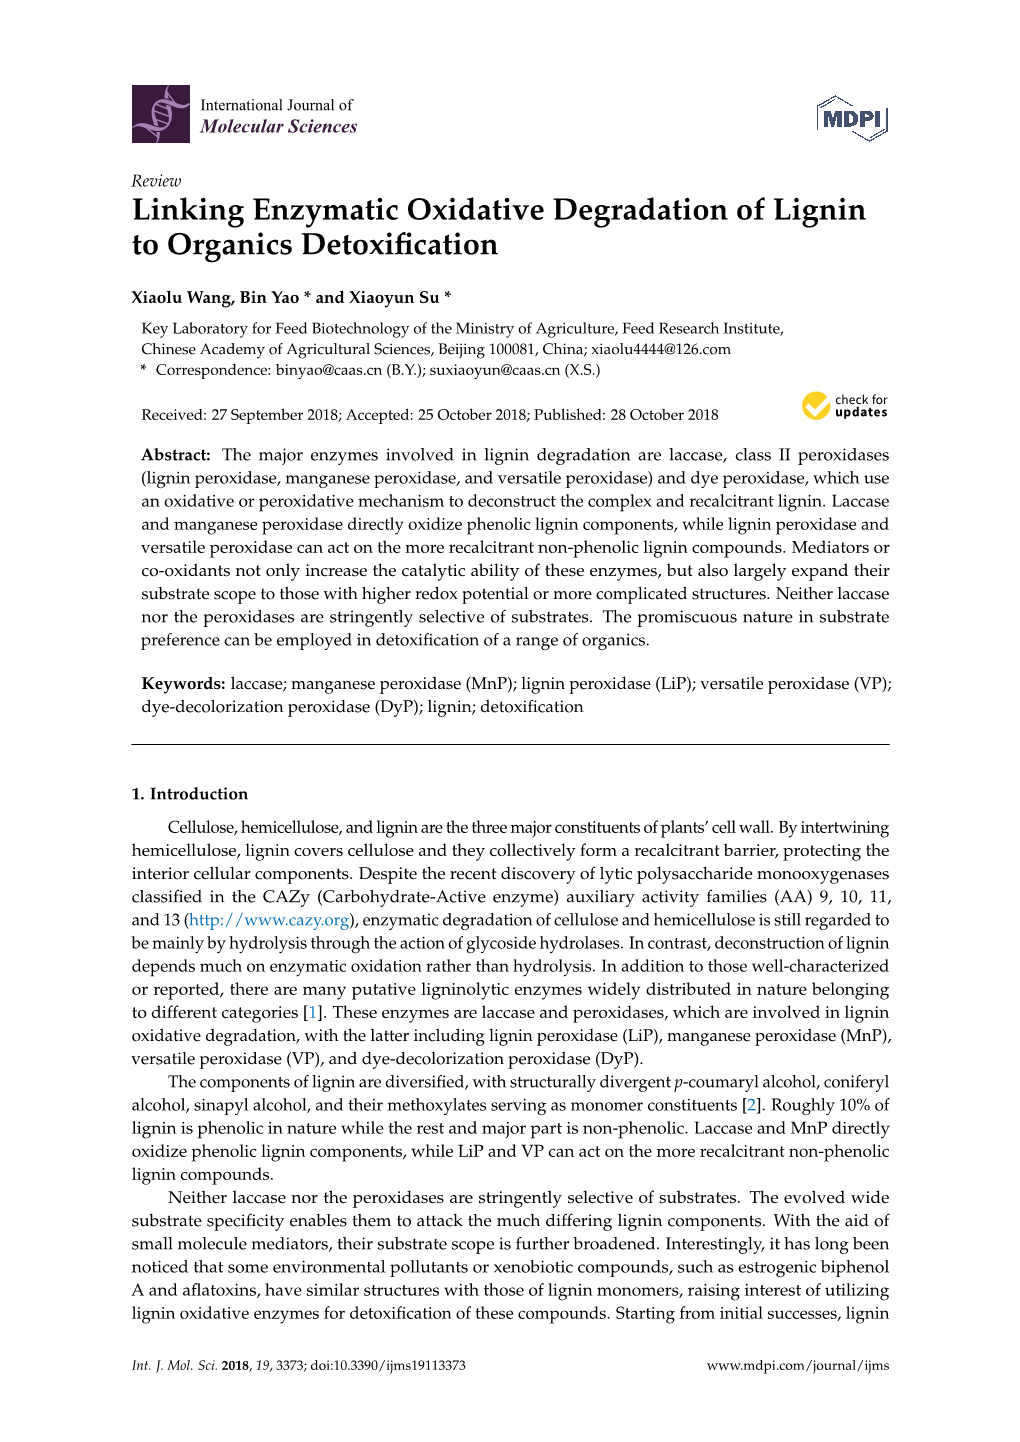 Linking Enzymatic Oxidative Degradation of Lignin to Organics Detoxiﬁcation